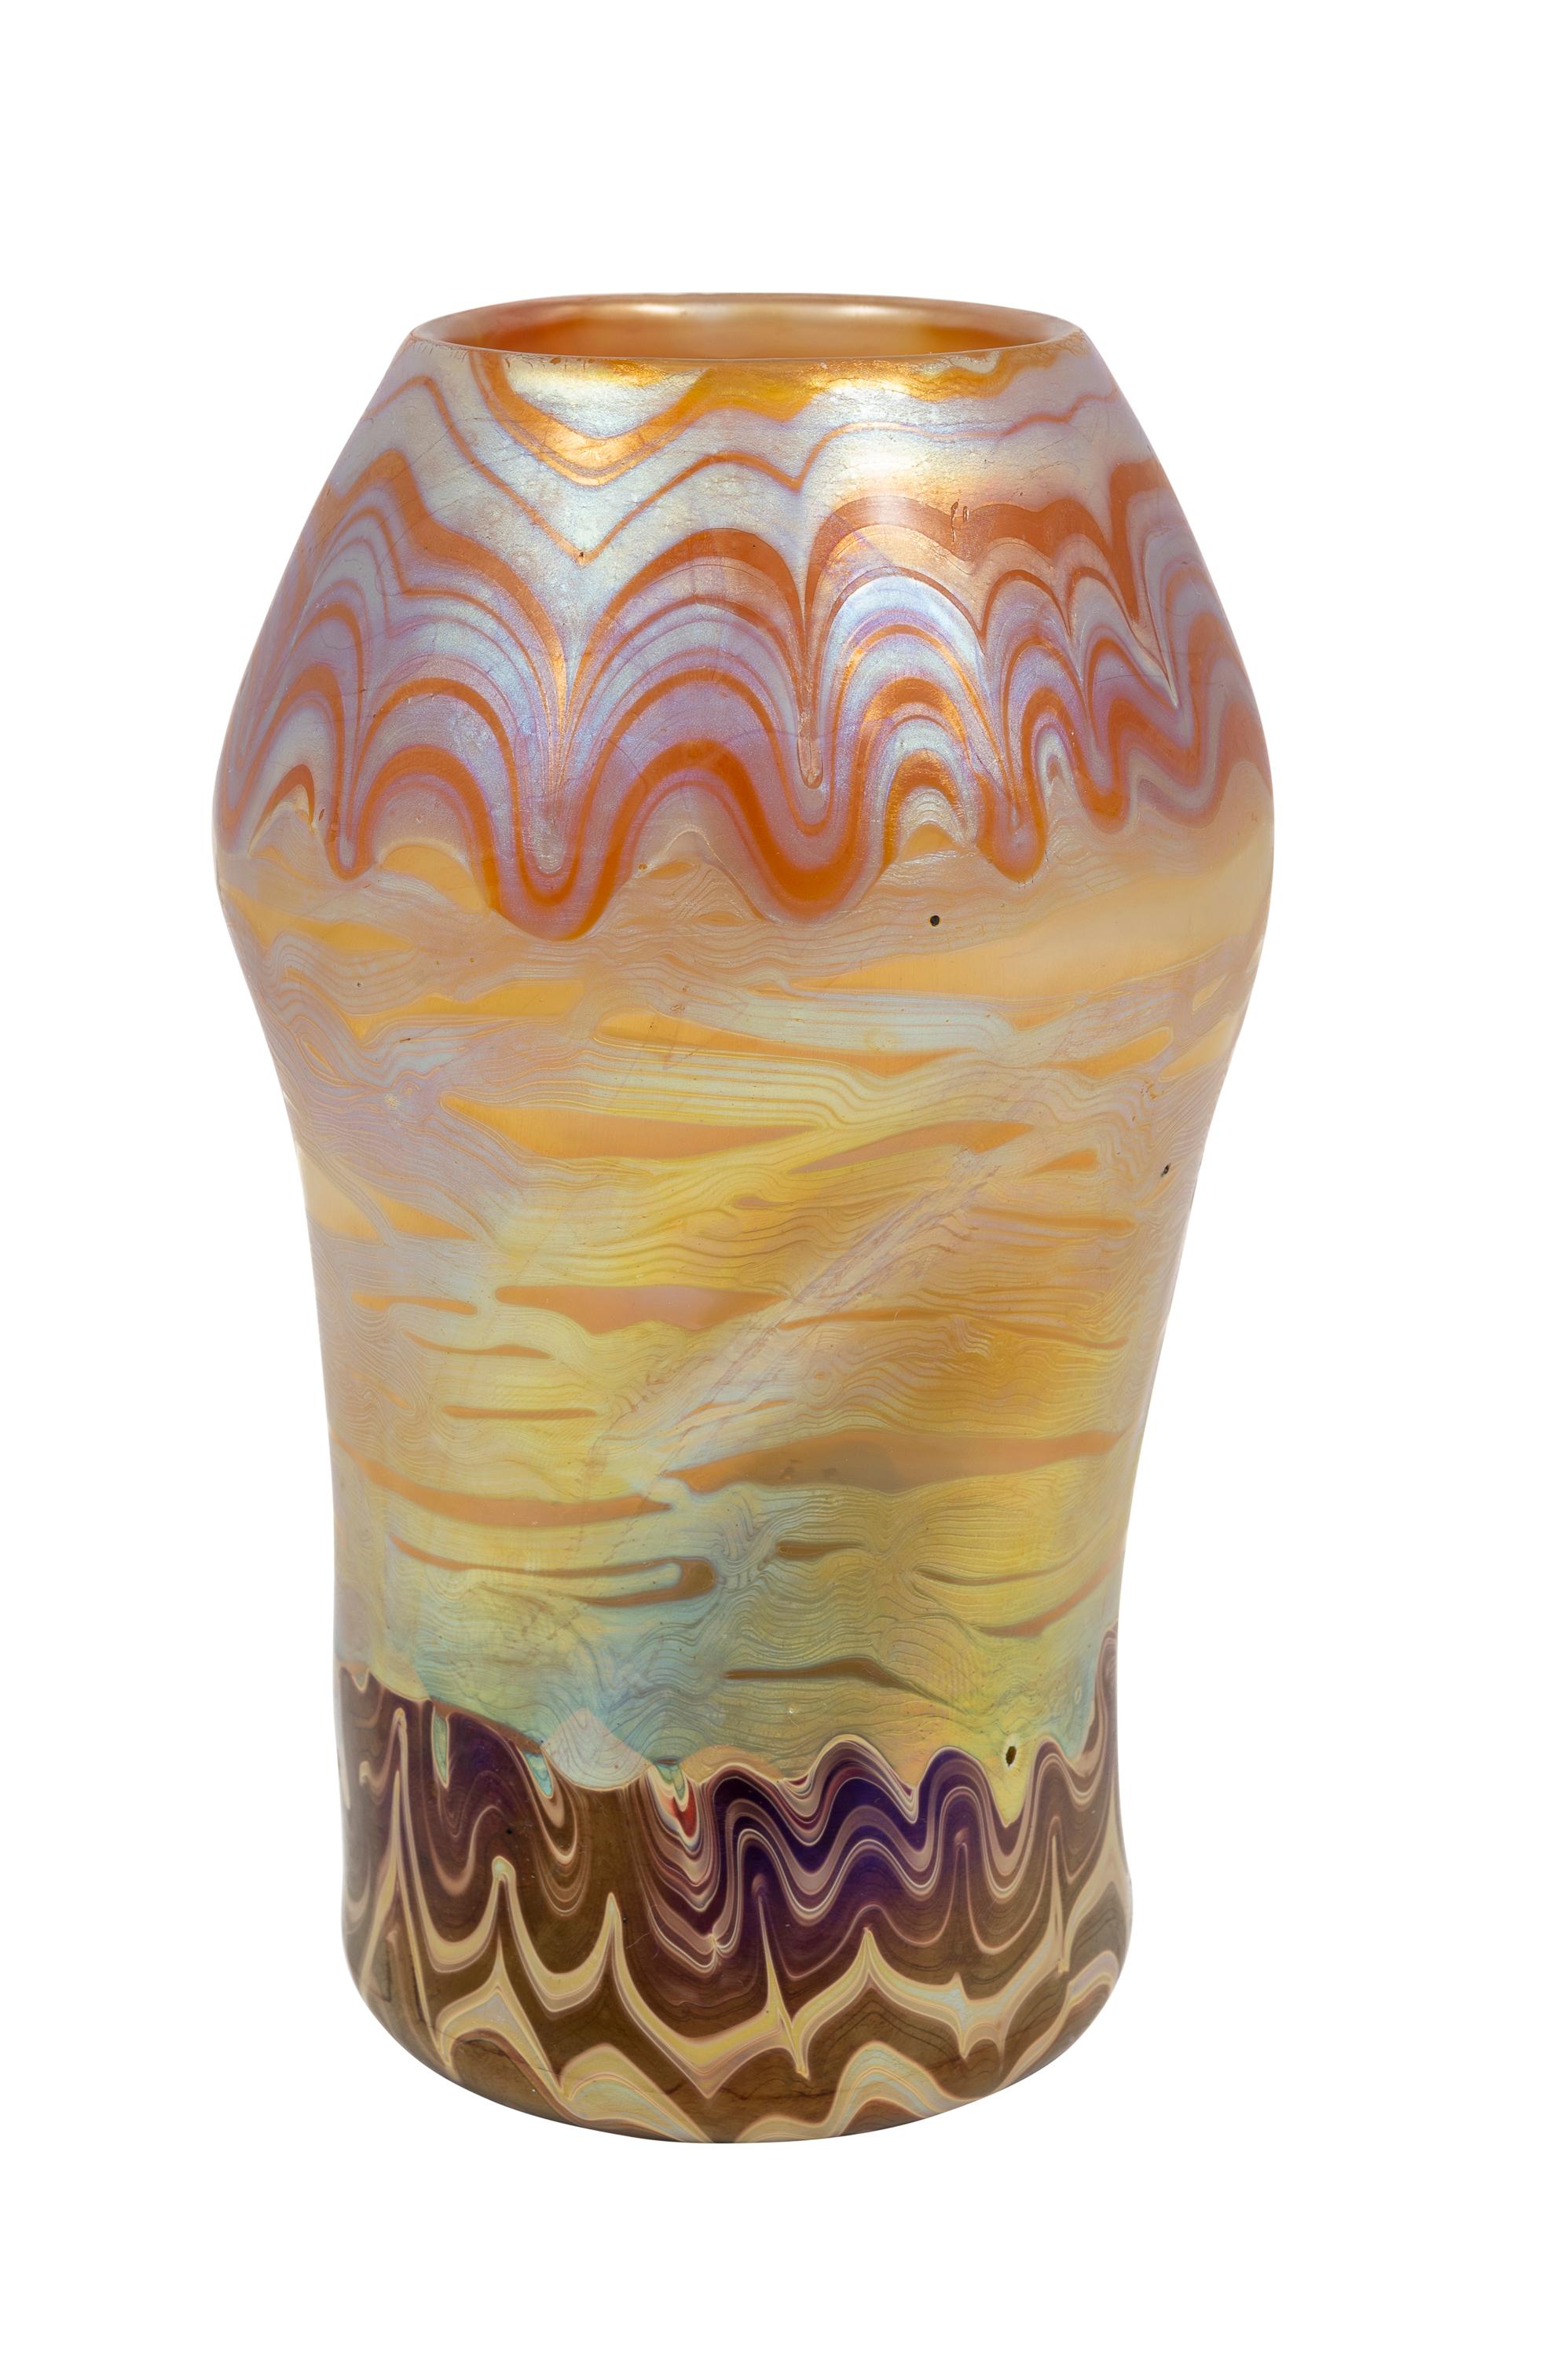 Jugendstil Art Nouveau Glass Vase Loetz PG 358 circa 1900 Bohemia 